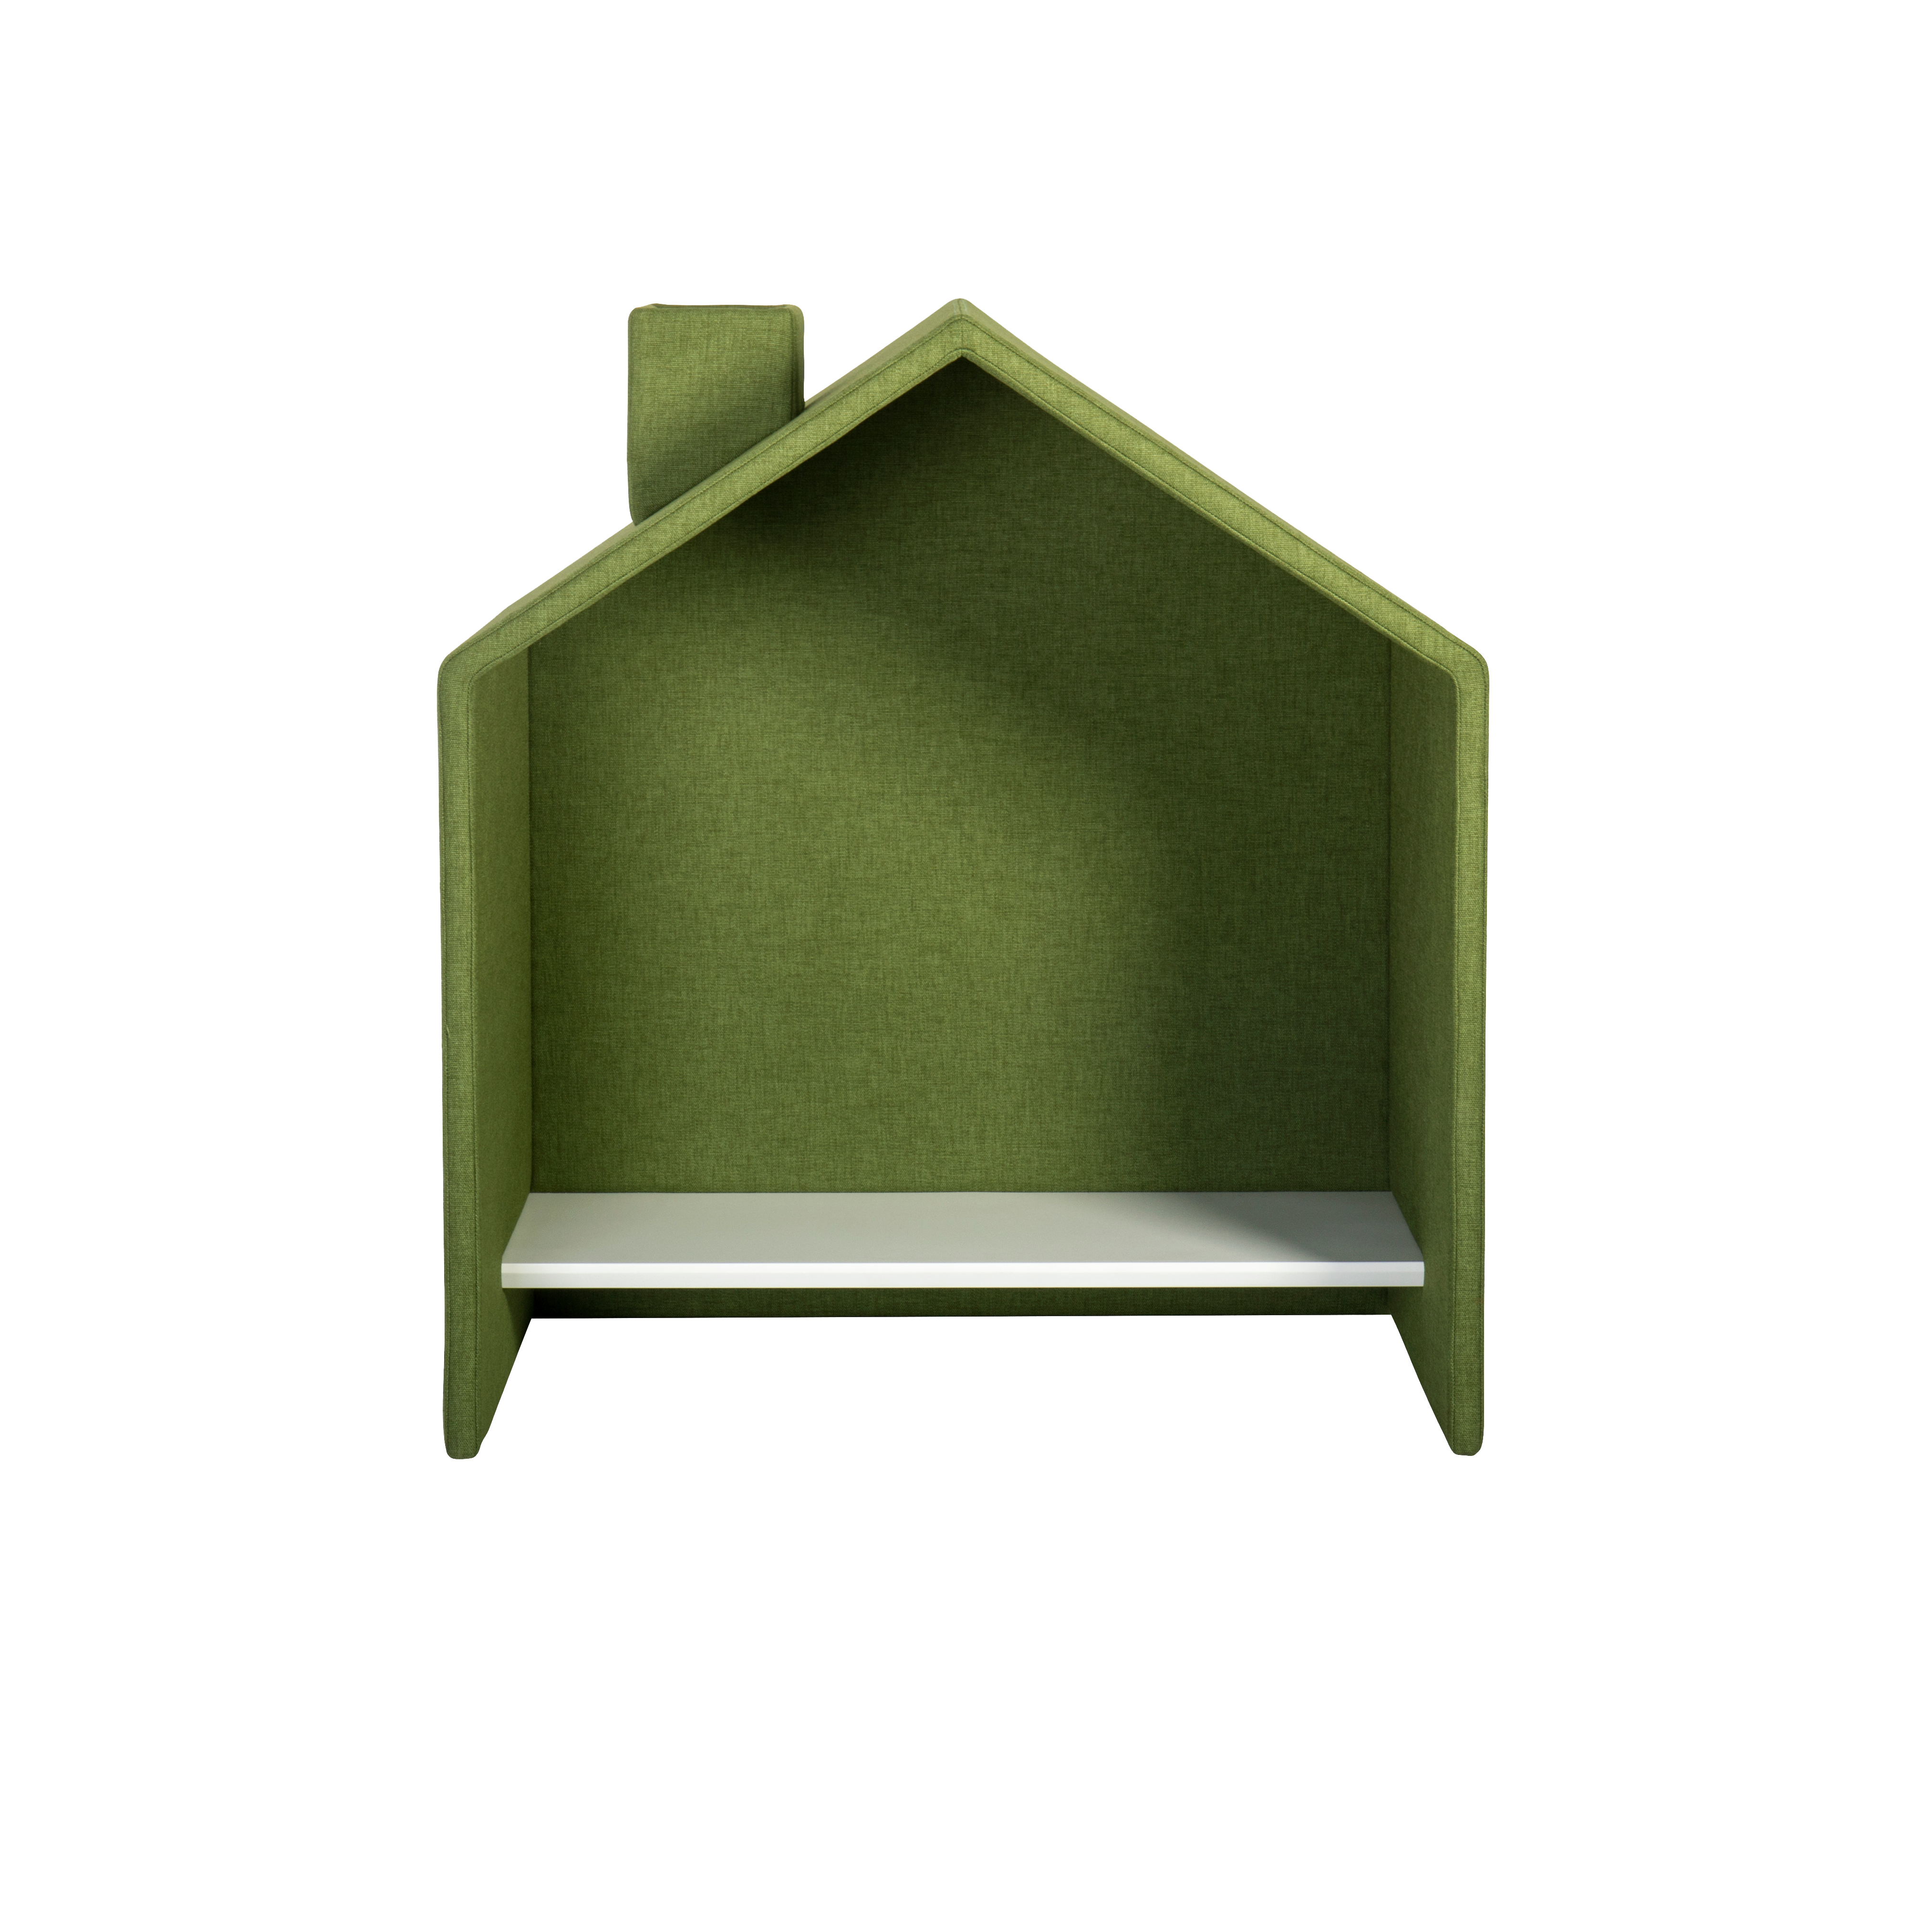 House - Wall mount (Cliff Award Winner)